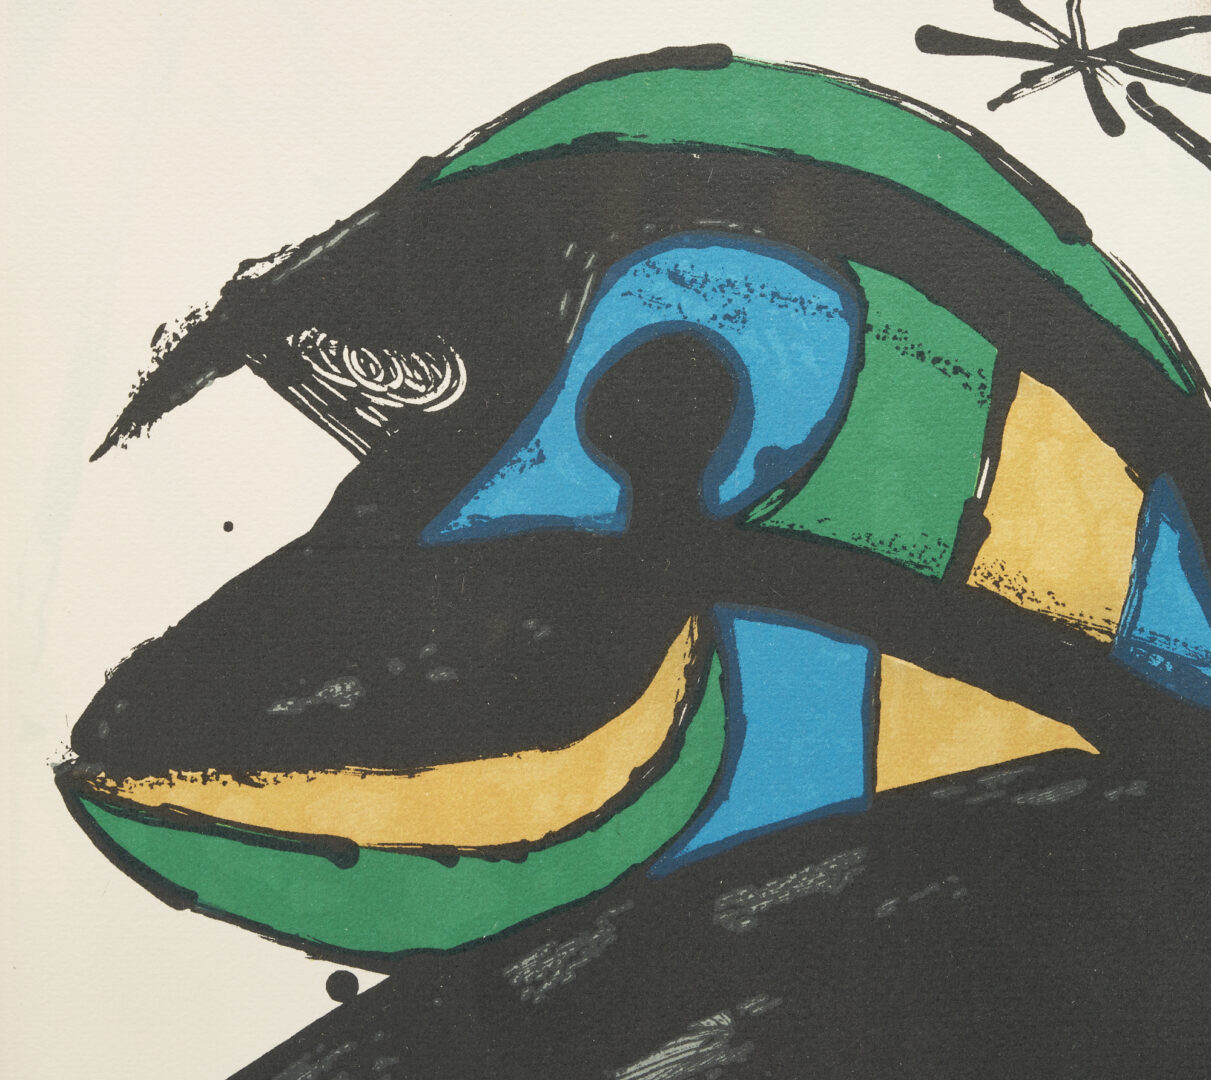 Lot 442: Joan Miro Lithograph, Fundacio Joan Miro, 1976